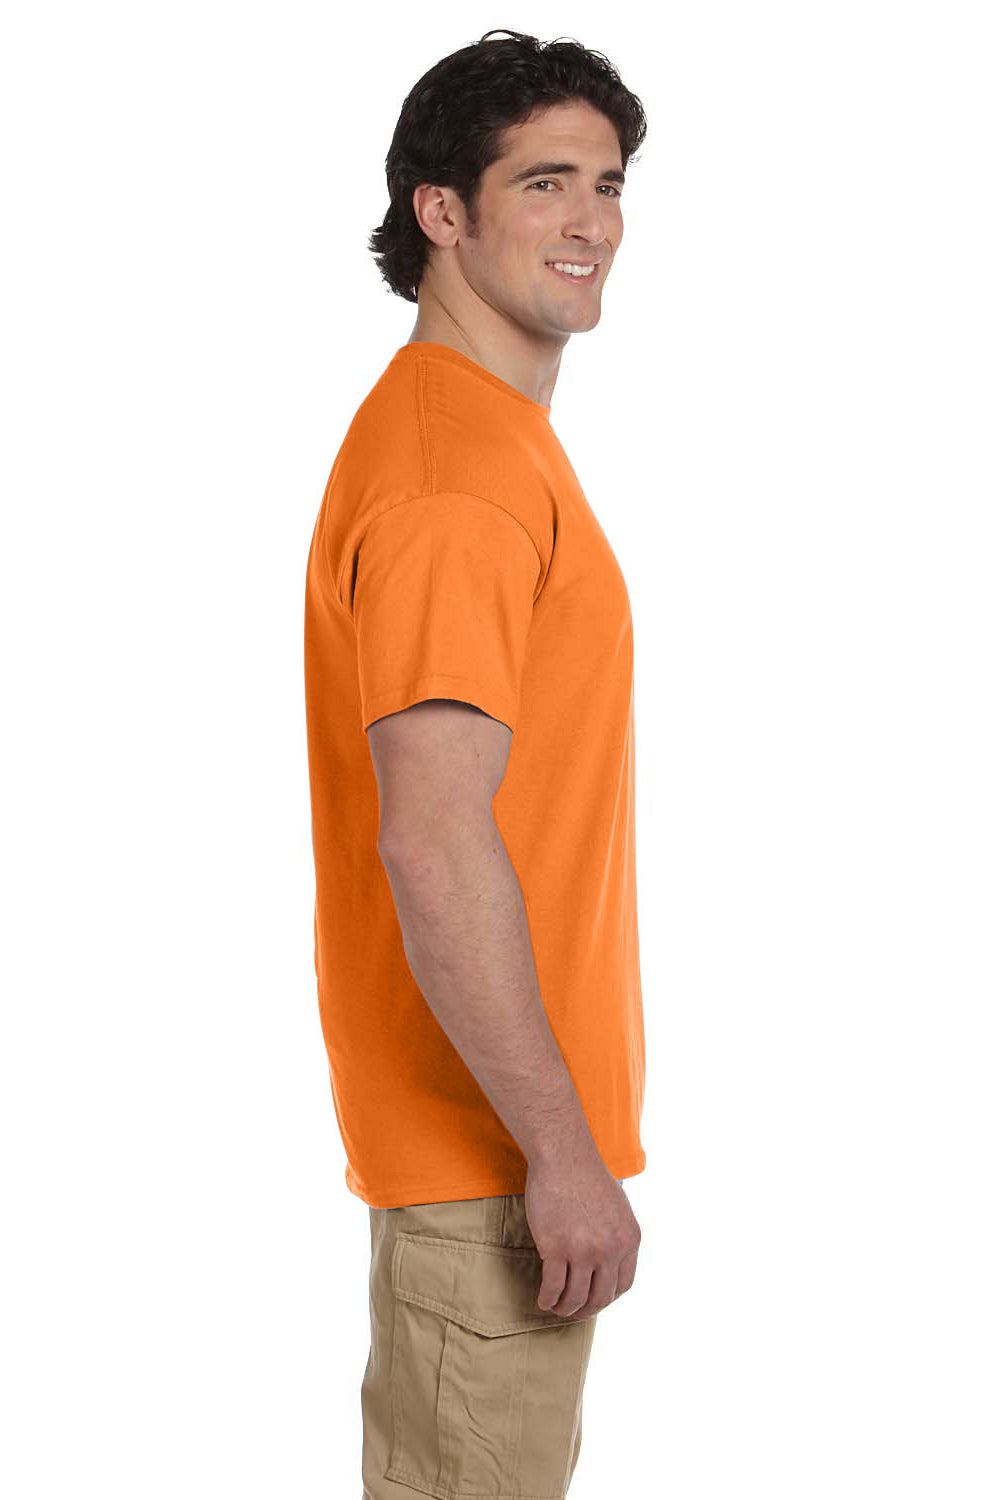 Hanes 5170 Mens EcoSmart Short Sleeve Crewneck T-Shirt Safety Orange SIde